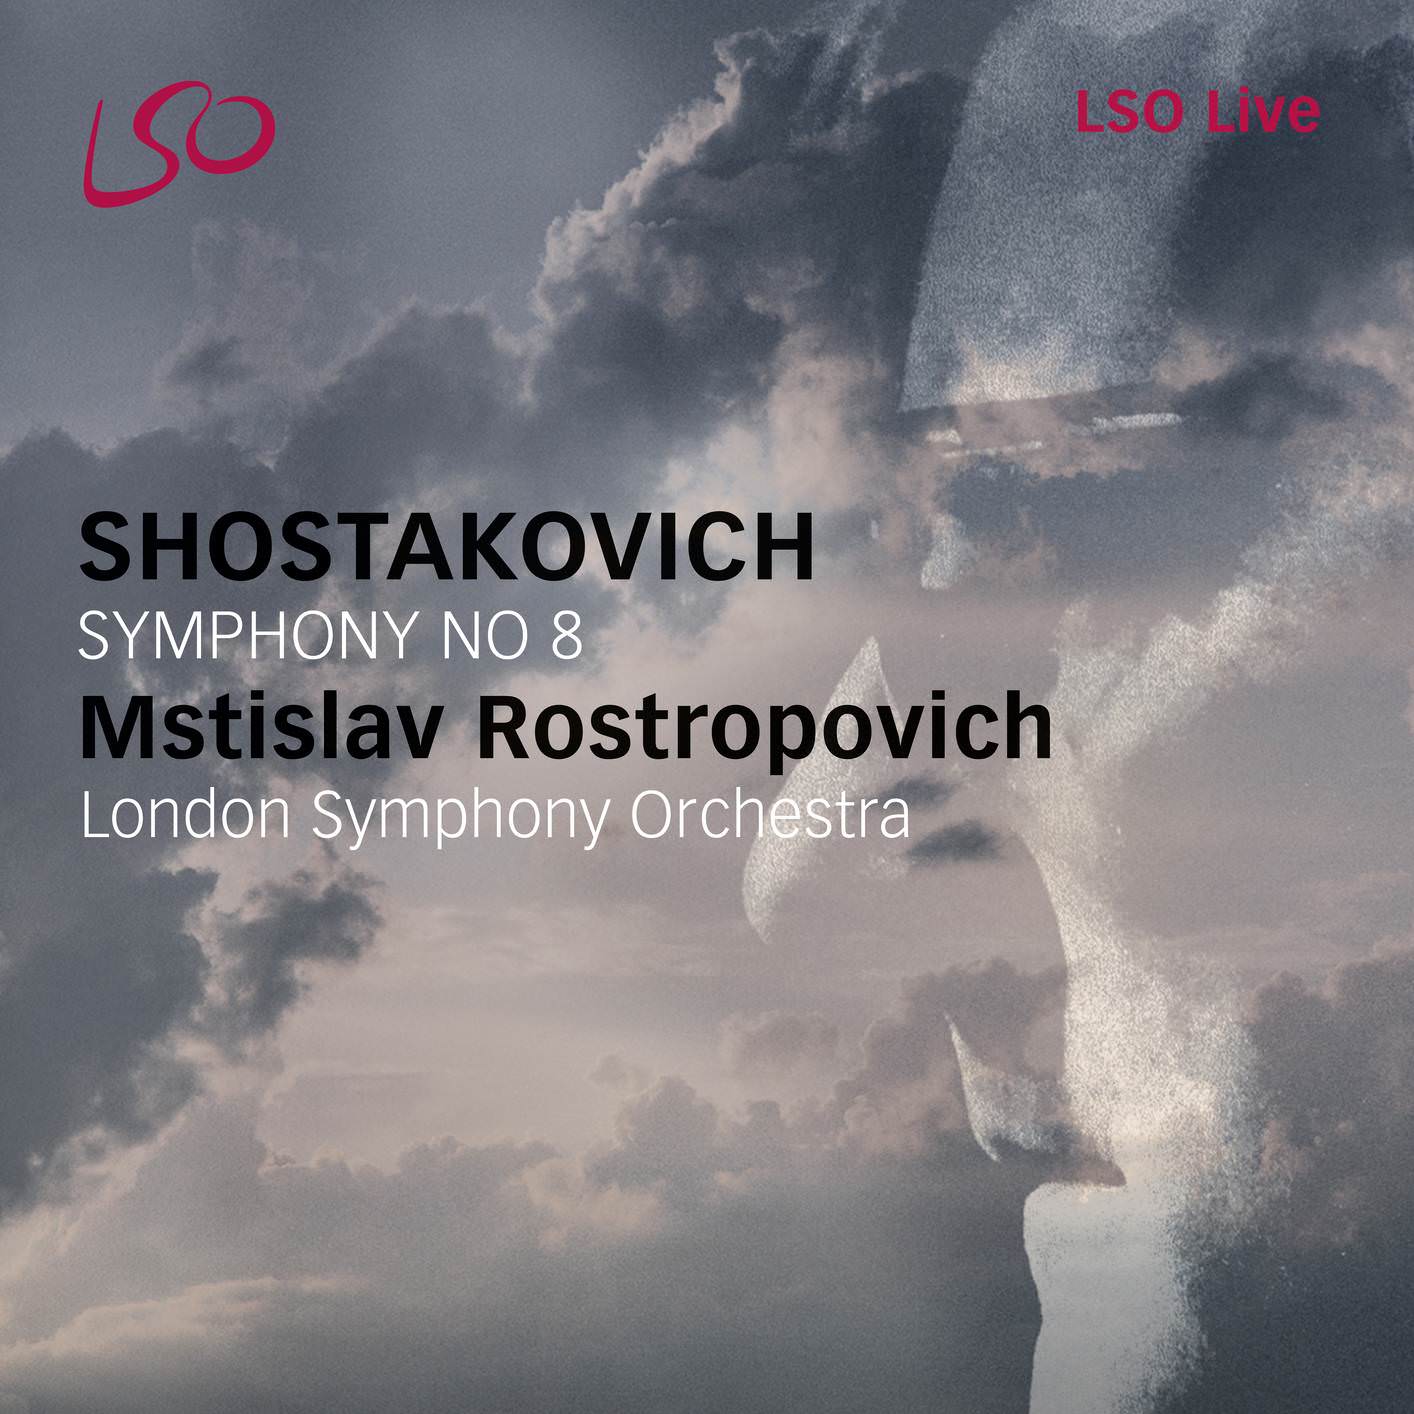 London Symphony Orchestra & Mstislav Rostropovich – Shostakovich: Symphony No. 8 (2005/2018) [FLAC 24bit/96kHz]